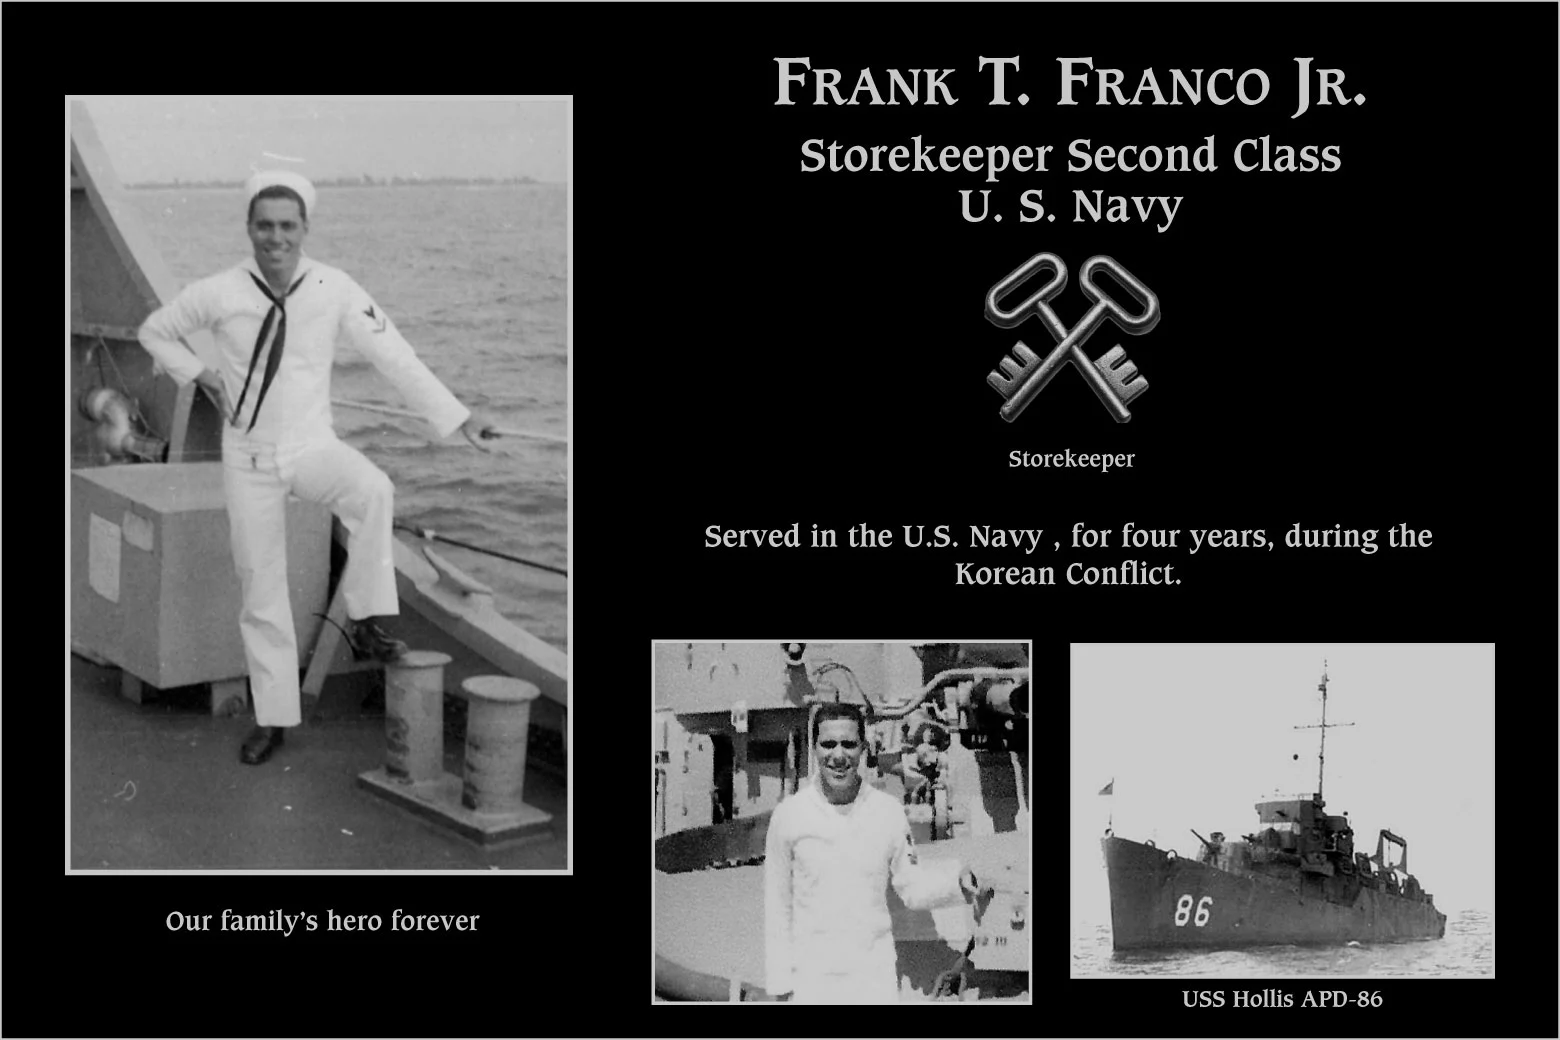 Frank T. Franco